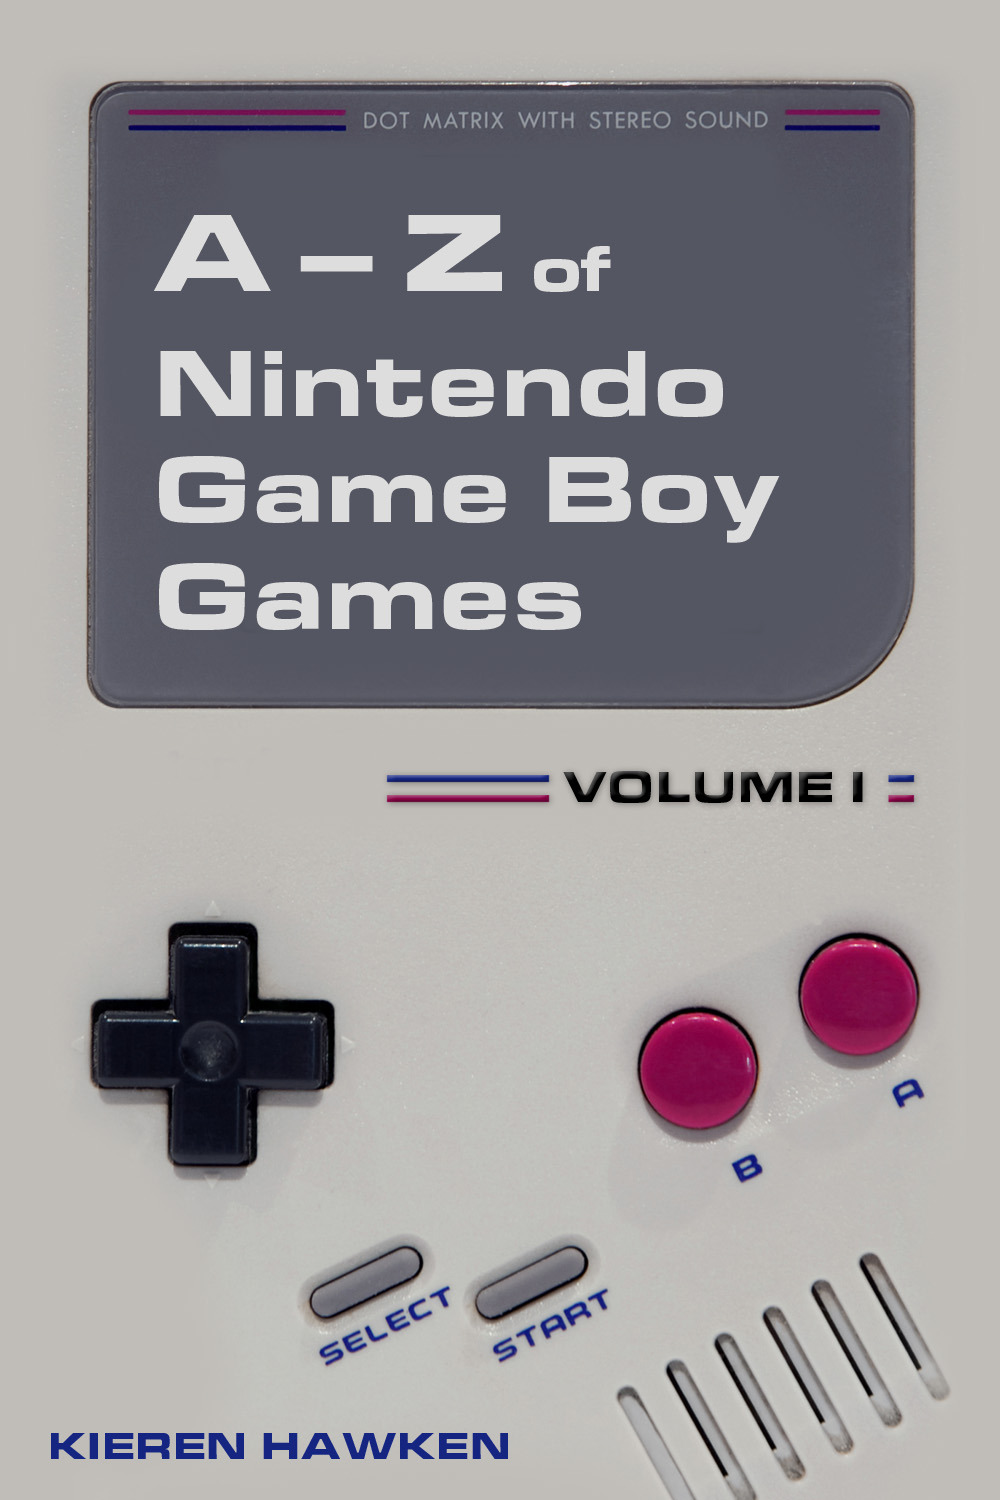 Hawken, Kieren - The A-Z of Nintendo Game Boy Games: Volume 1, ebook